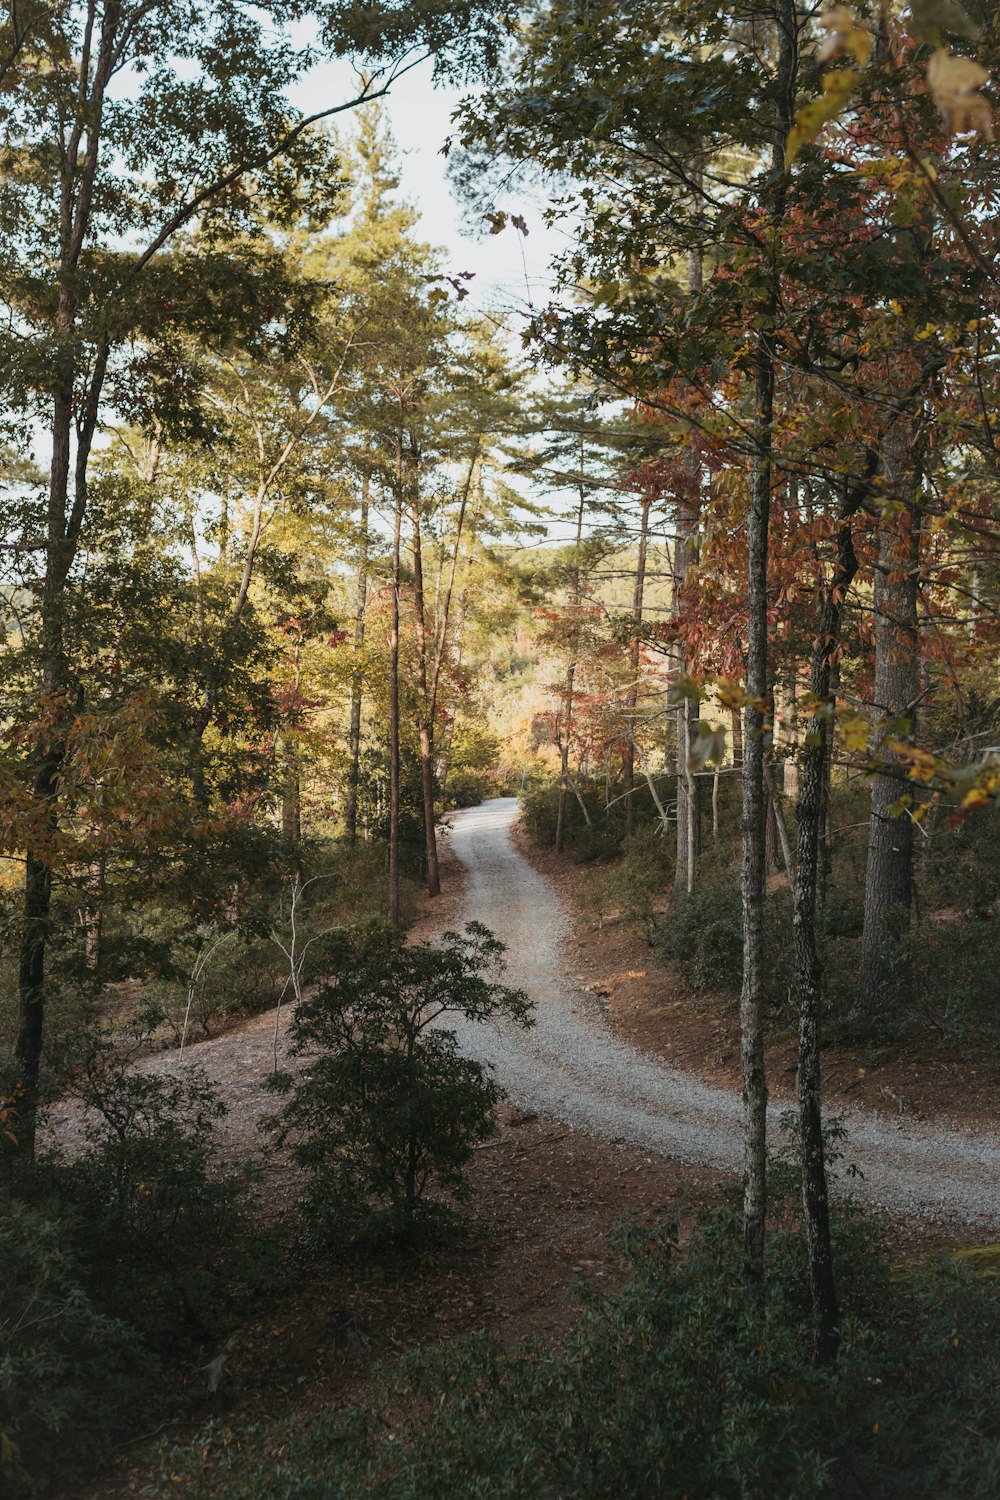 a dirt road through a forest